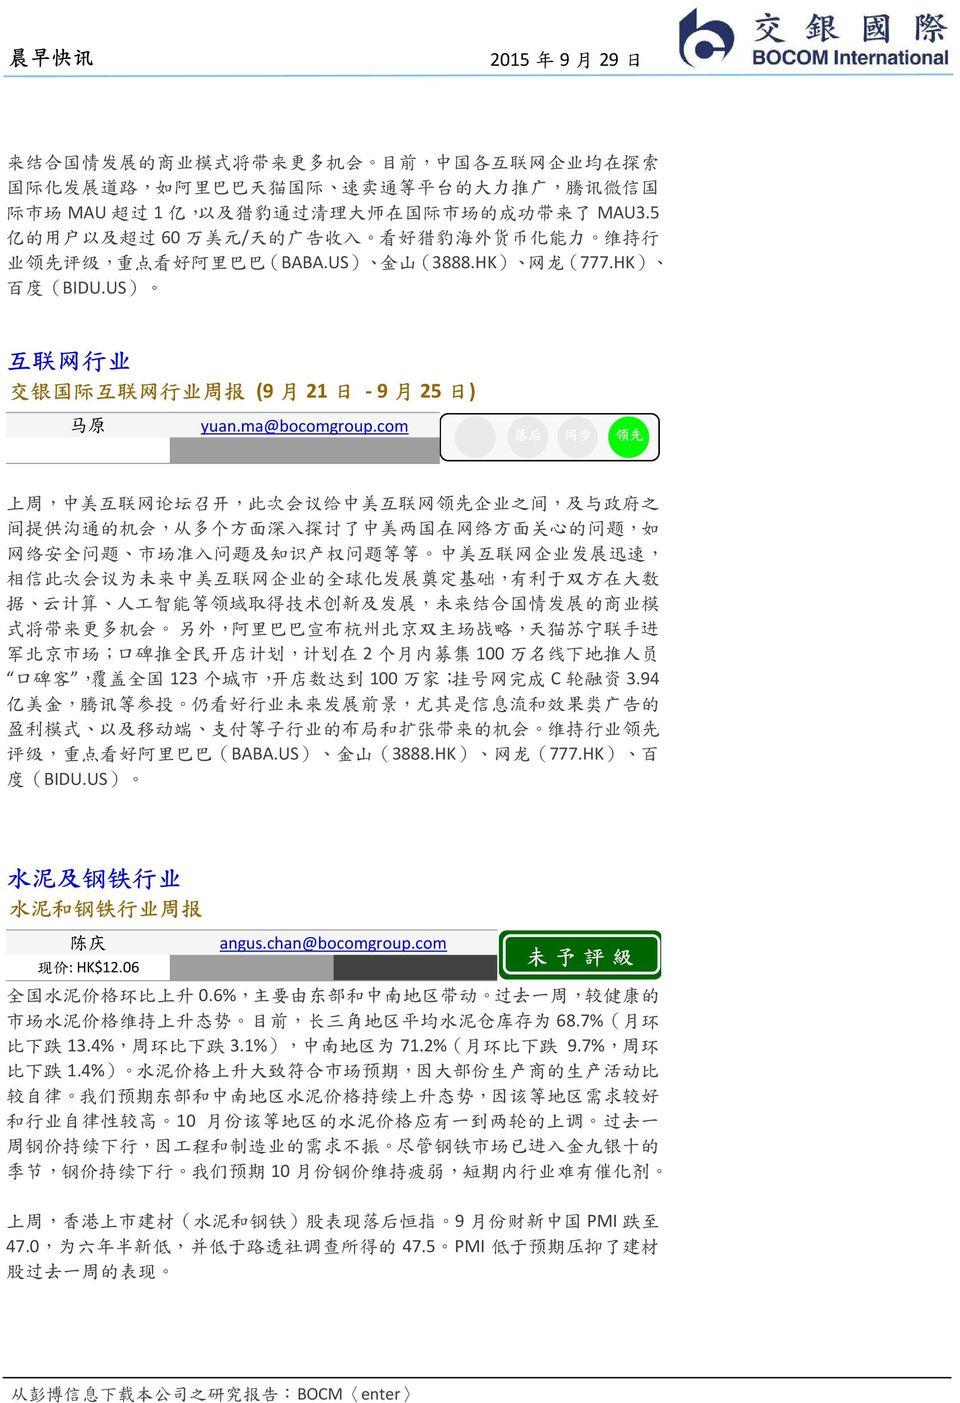 US) 互 联 网 行 业 交 银 国 际 互 联 网 行 业 周 报 (9 月 21 日 - 9 月 25 日 ) 马 原 yuan.ma@bocomgroup.